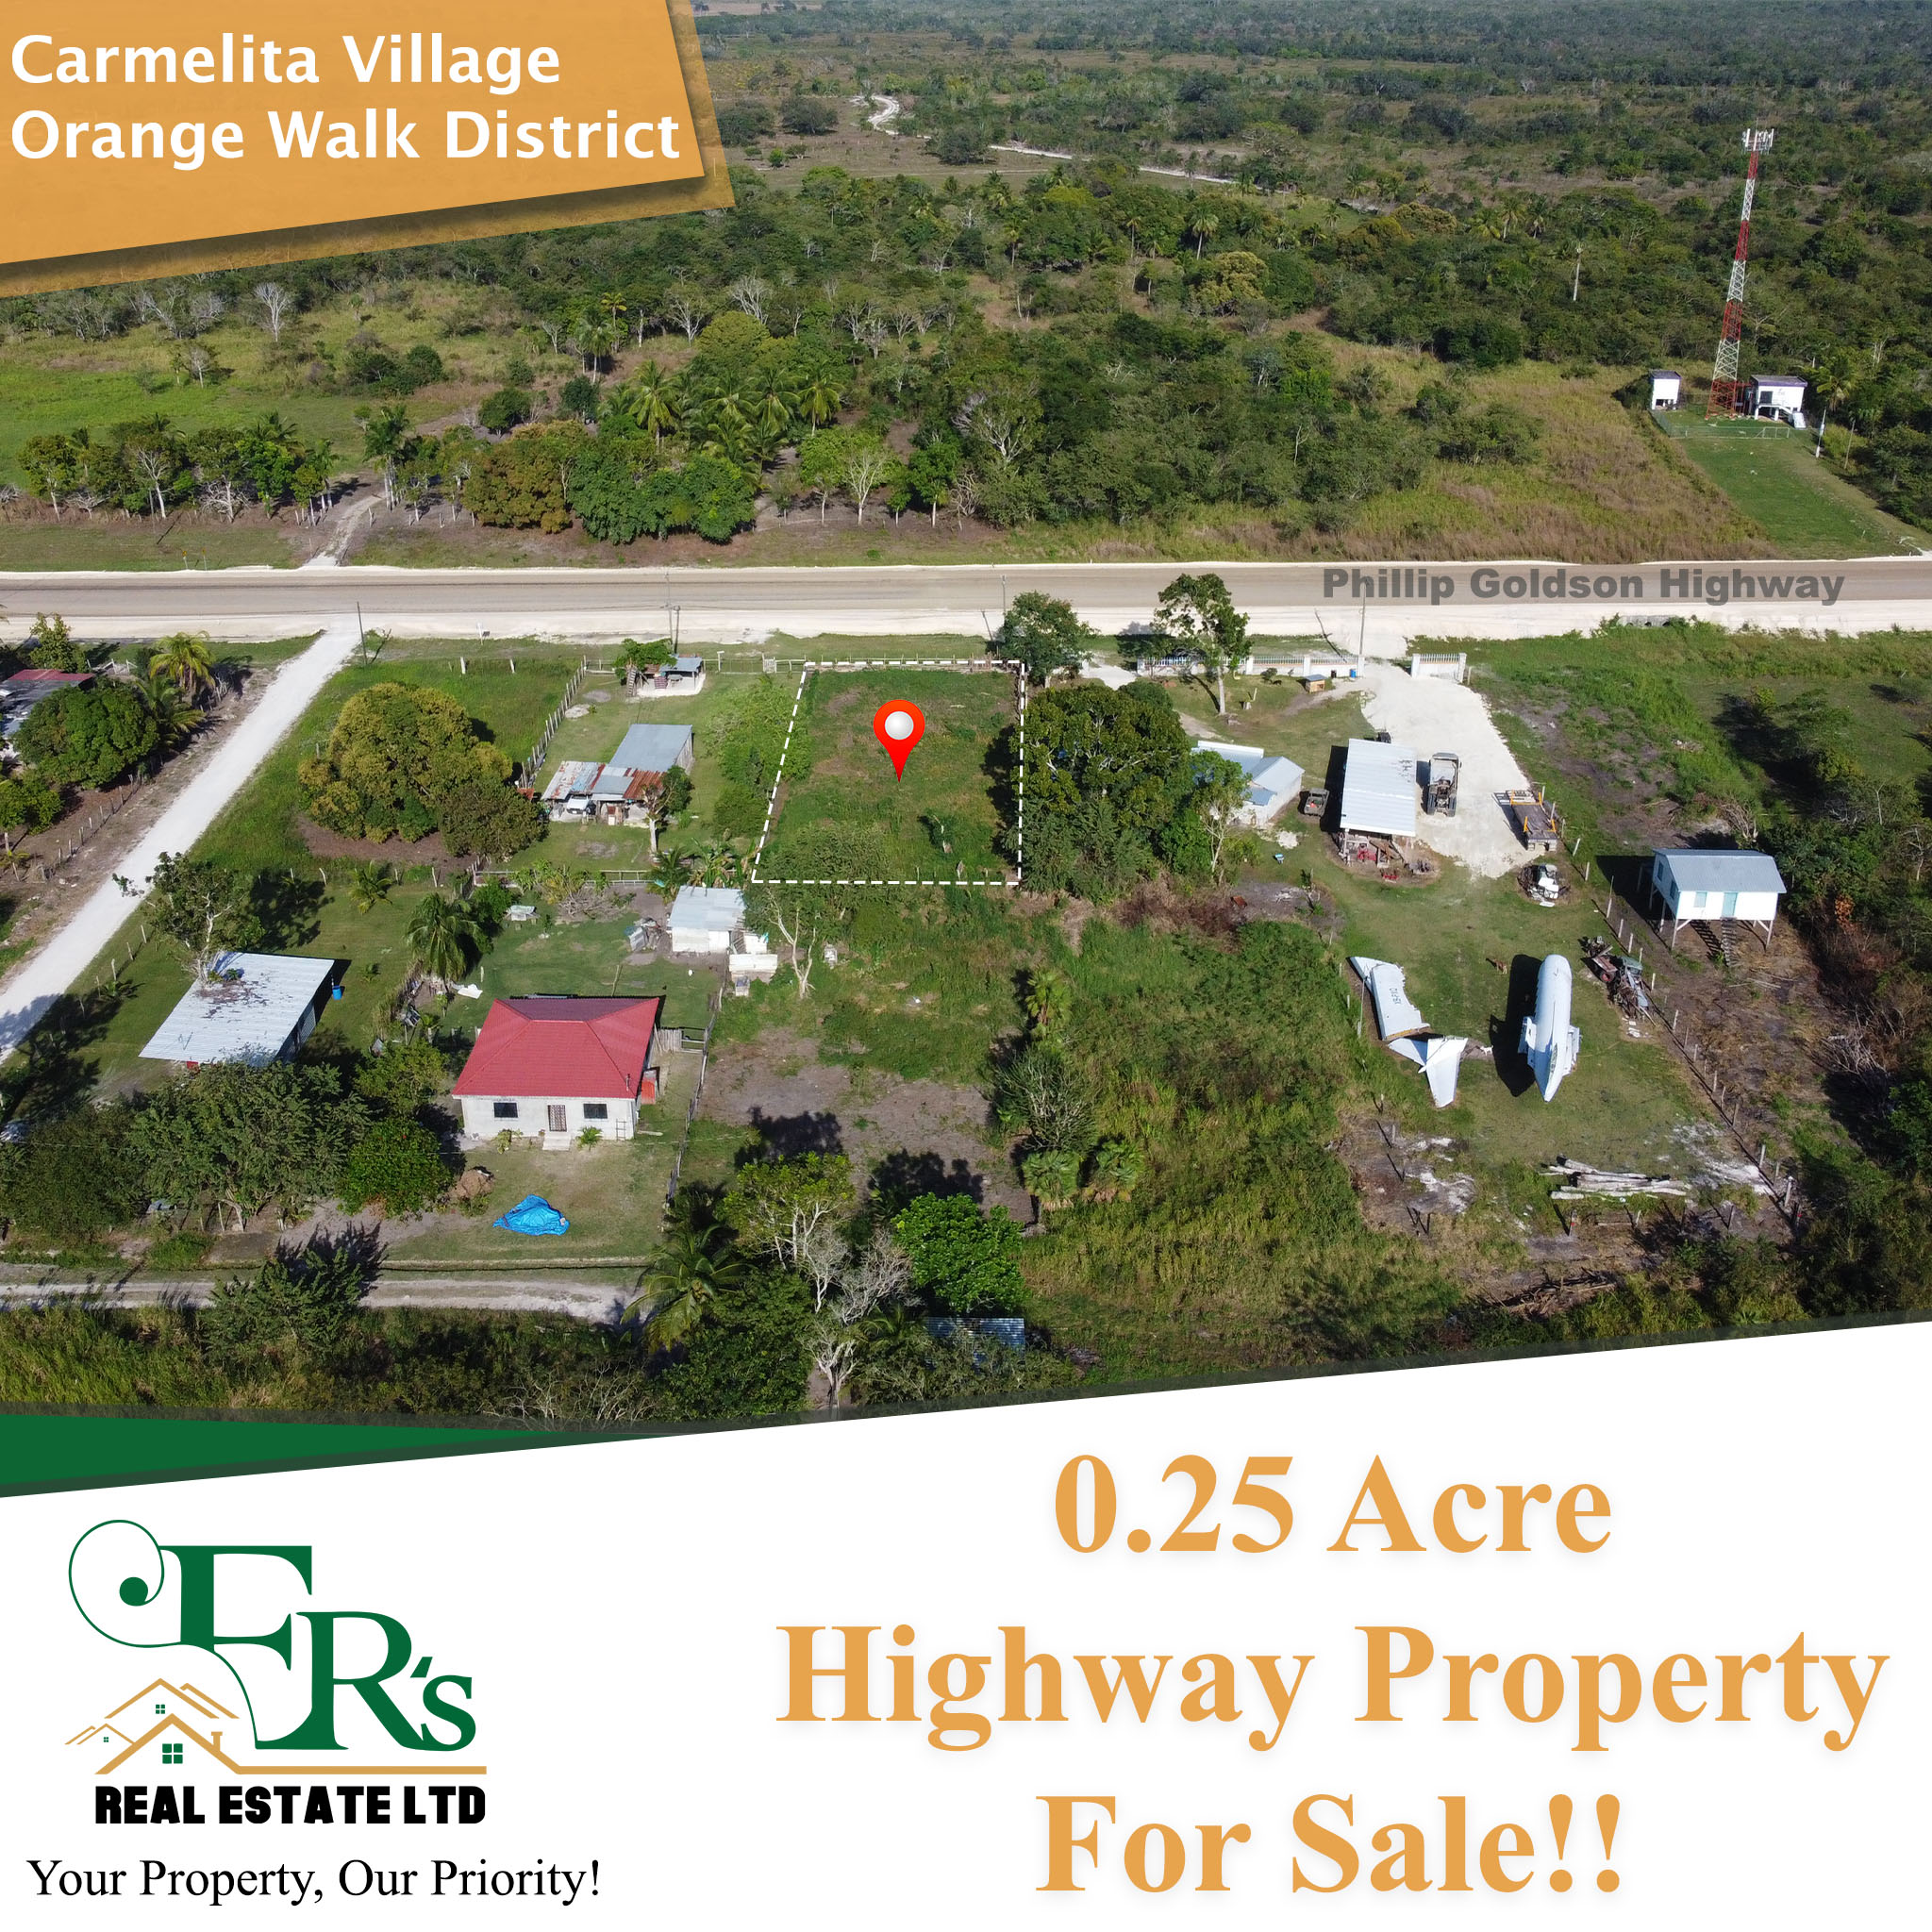 O.25 Acre Highway Property in Carmelita Village, Orange Walk